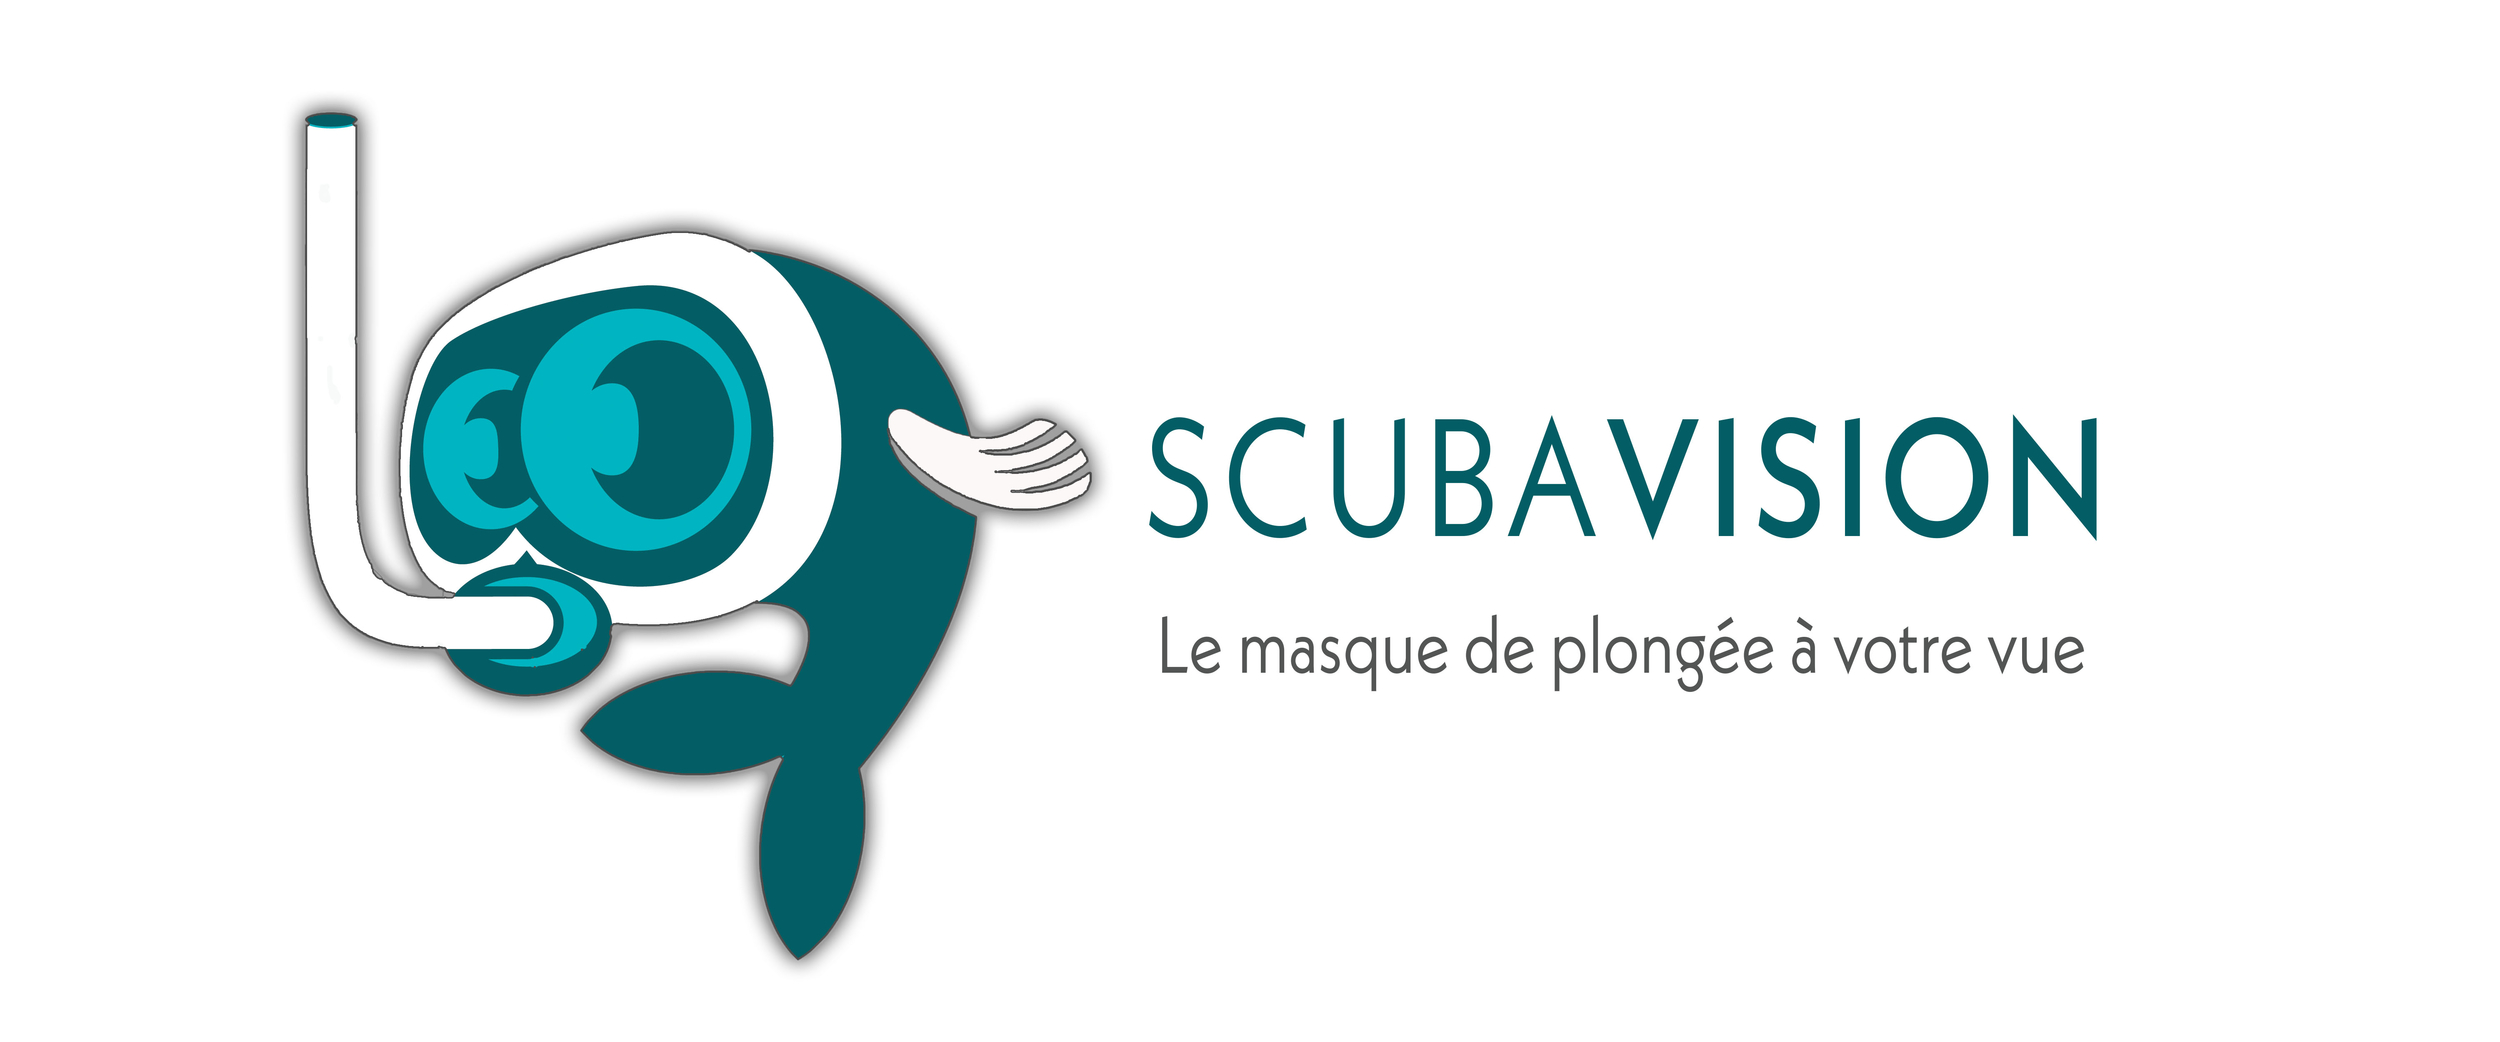 Scubavision.fr - Masque de plongée progressif